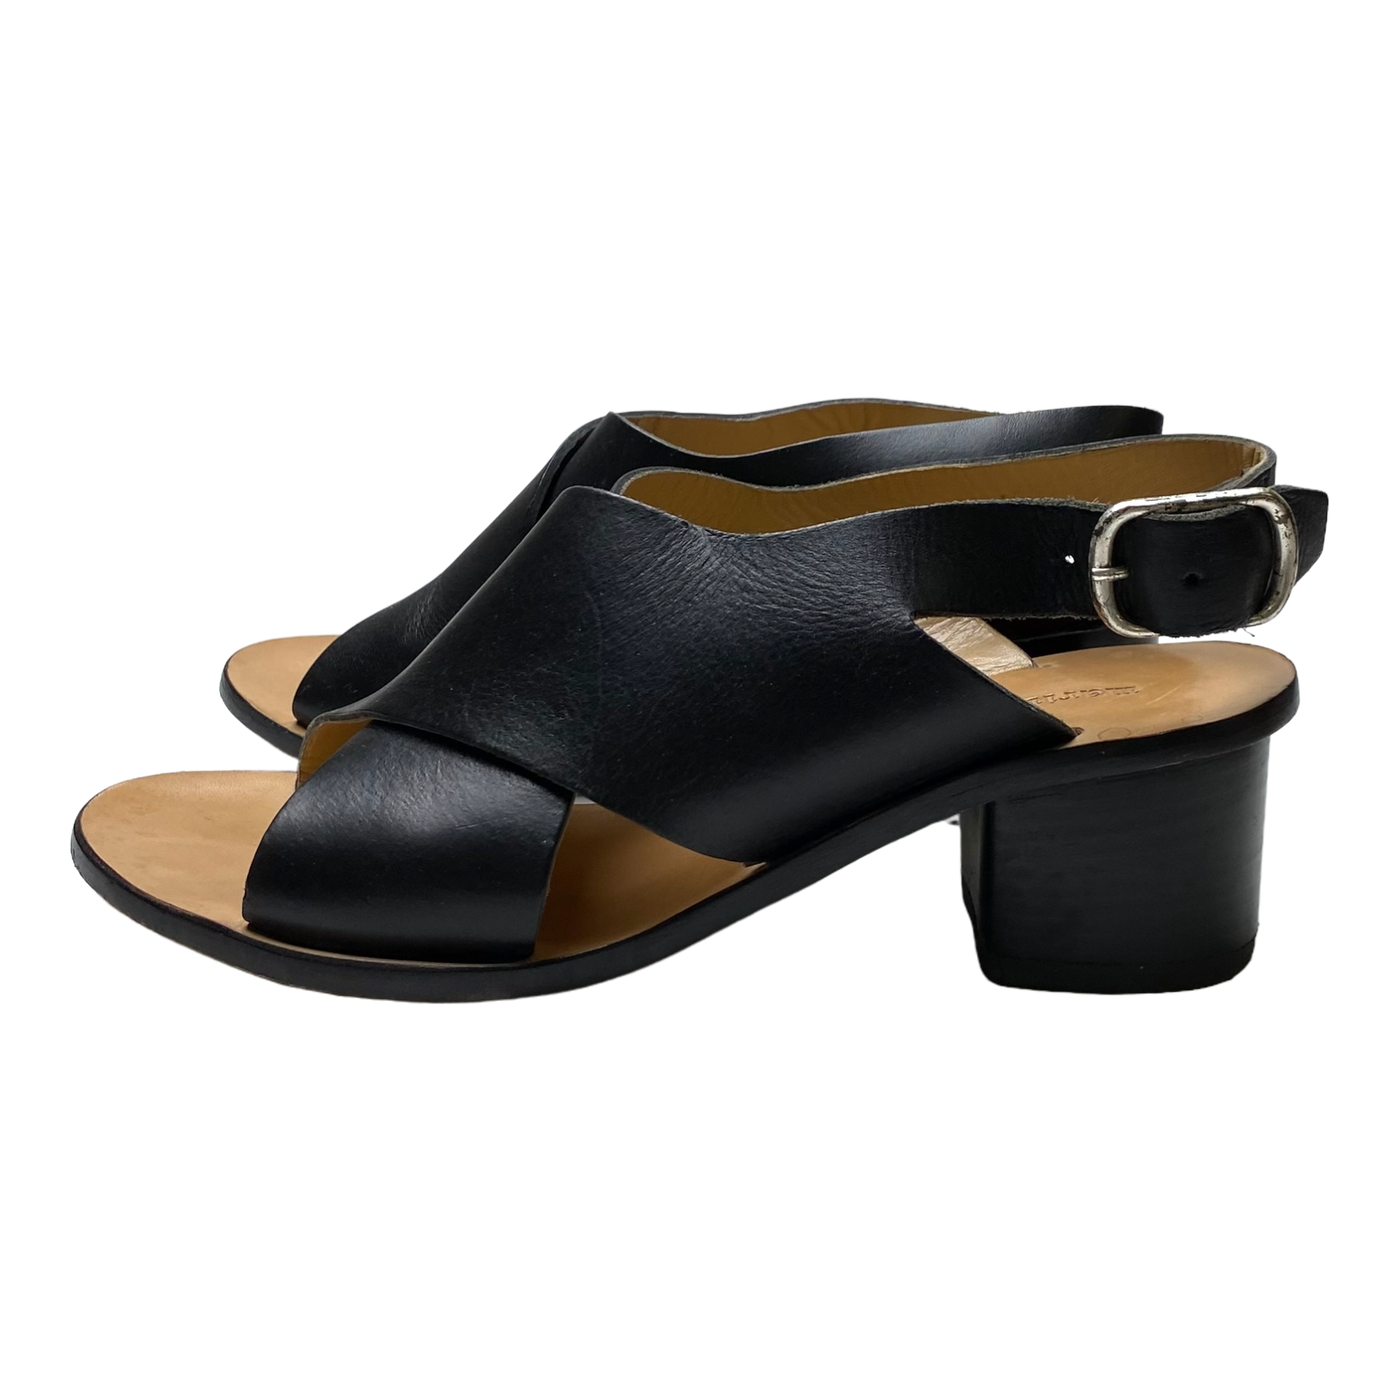 Marimekko leather sandals, black | 38